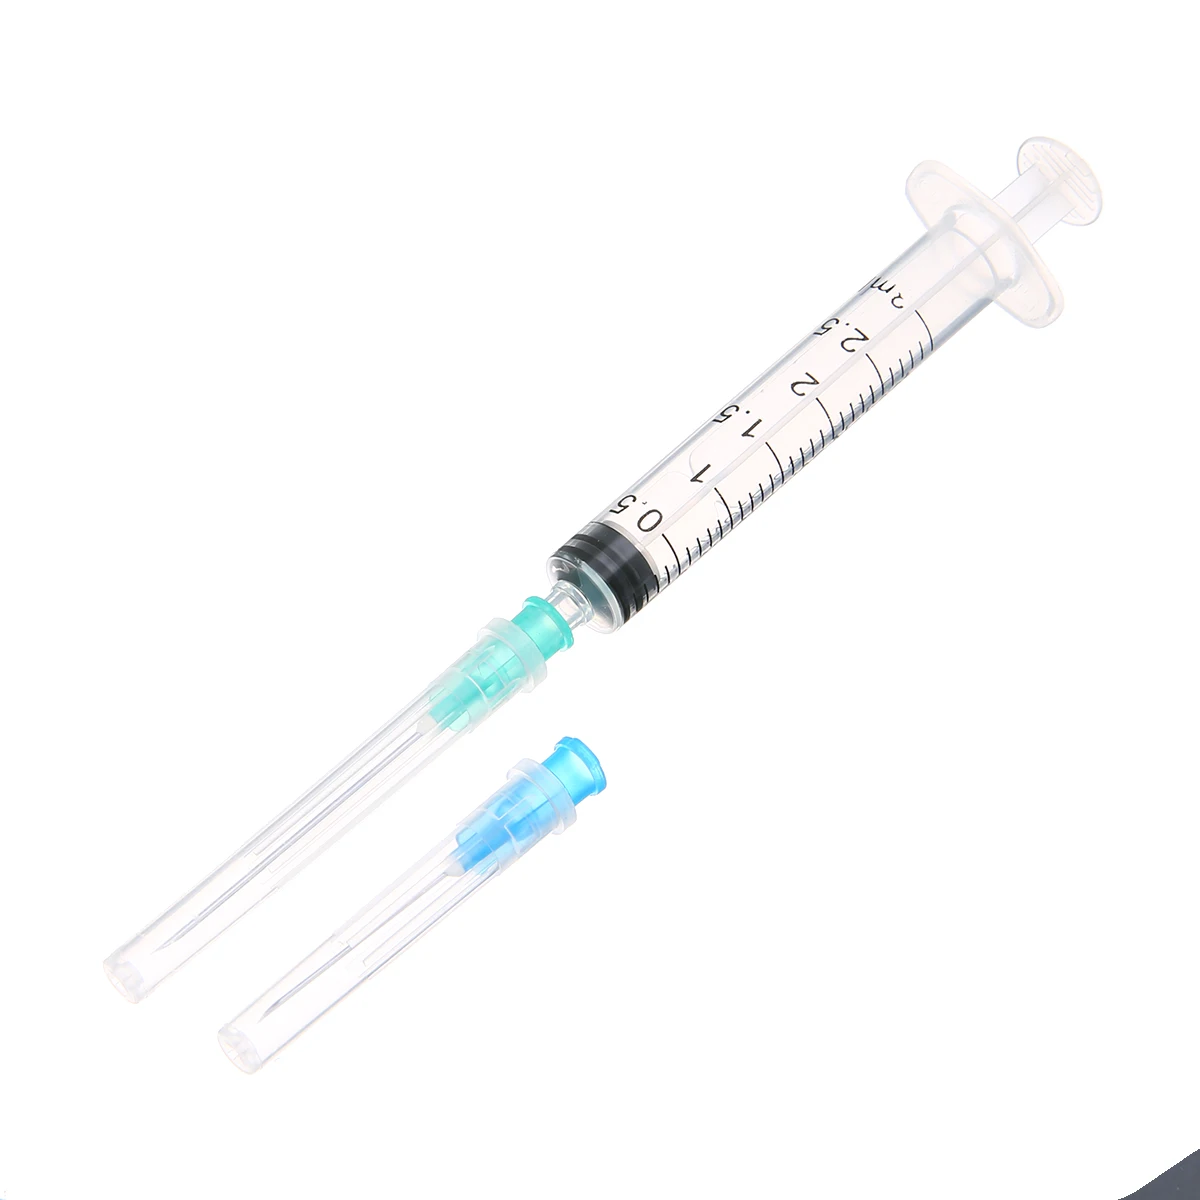 10pcs 3ml Syringe injector + 10pcs Green 21G Drawing Tip Needles + 10pcs Blue 23G Injection Needles